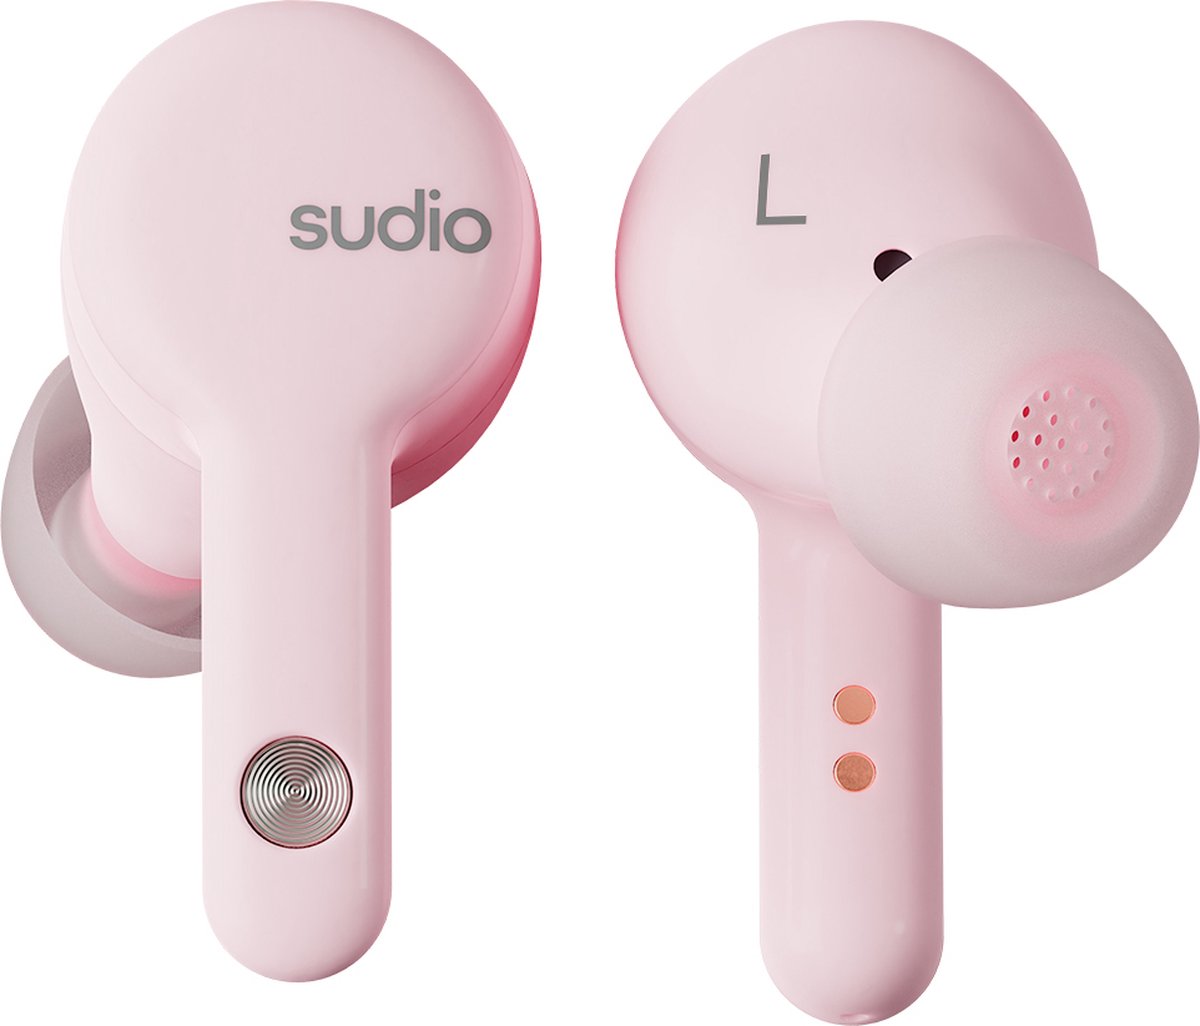 Sudio A2 in-ear true wireless earphones - draadloze oordopjes - met active noice cancellation (ANC) - roze